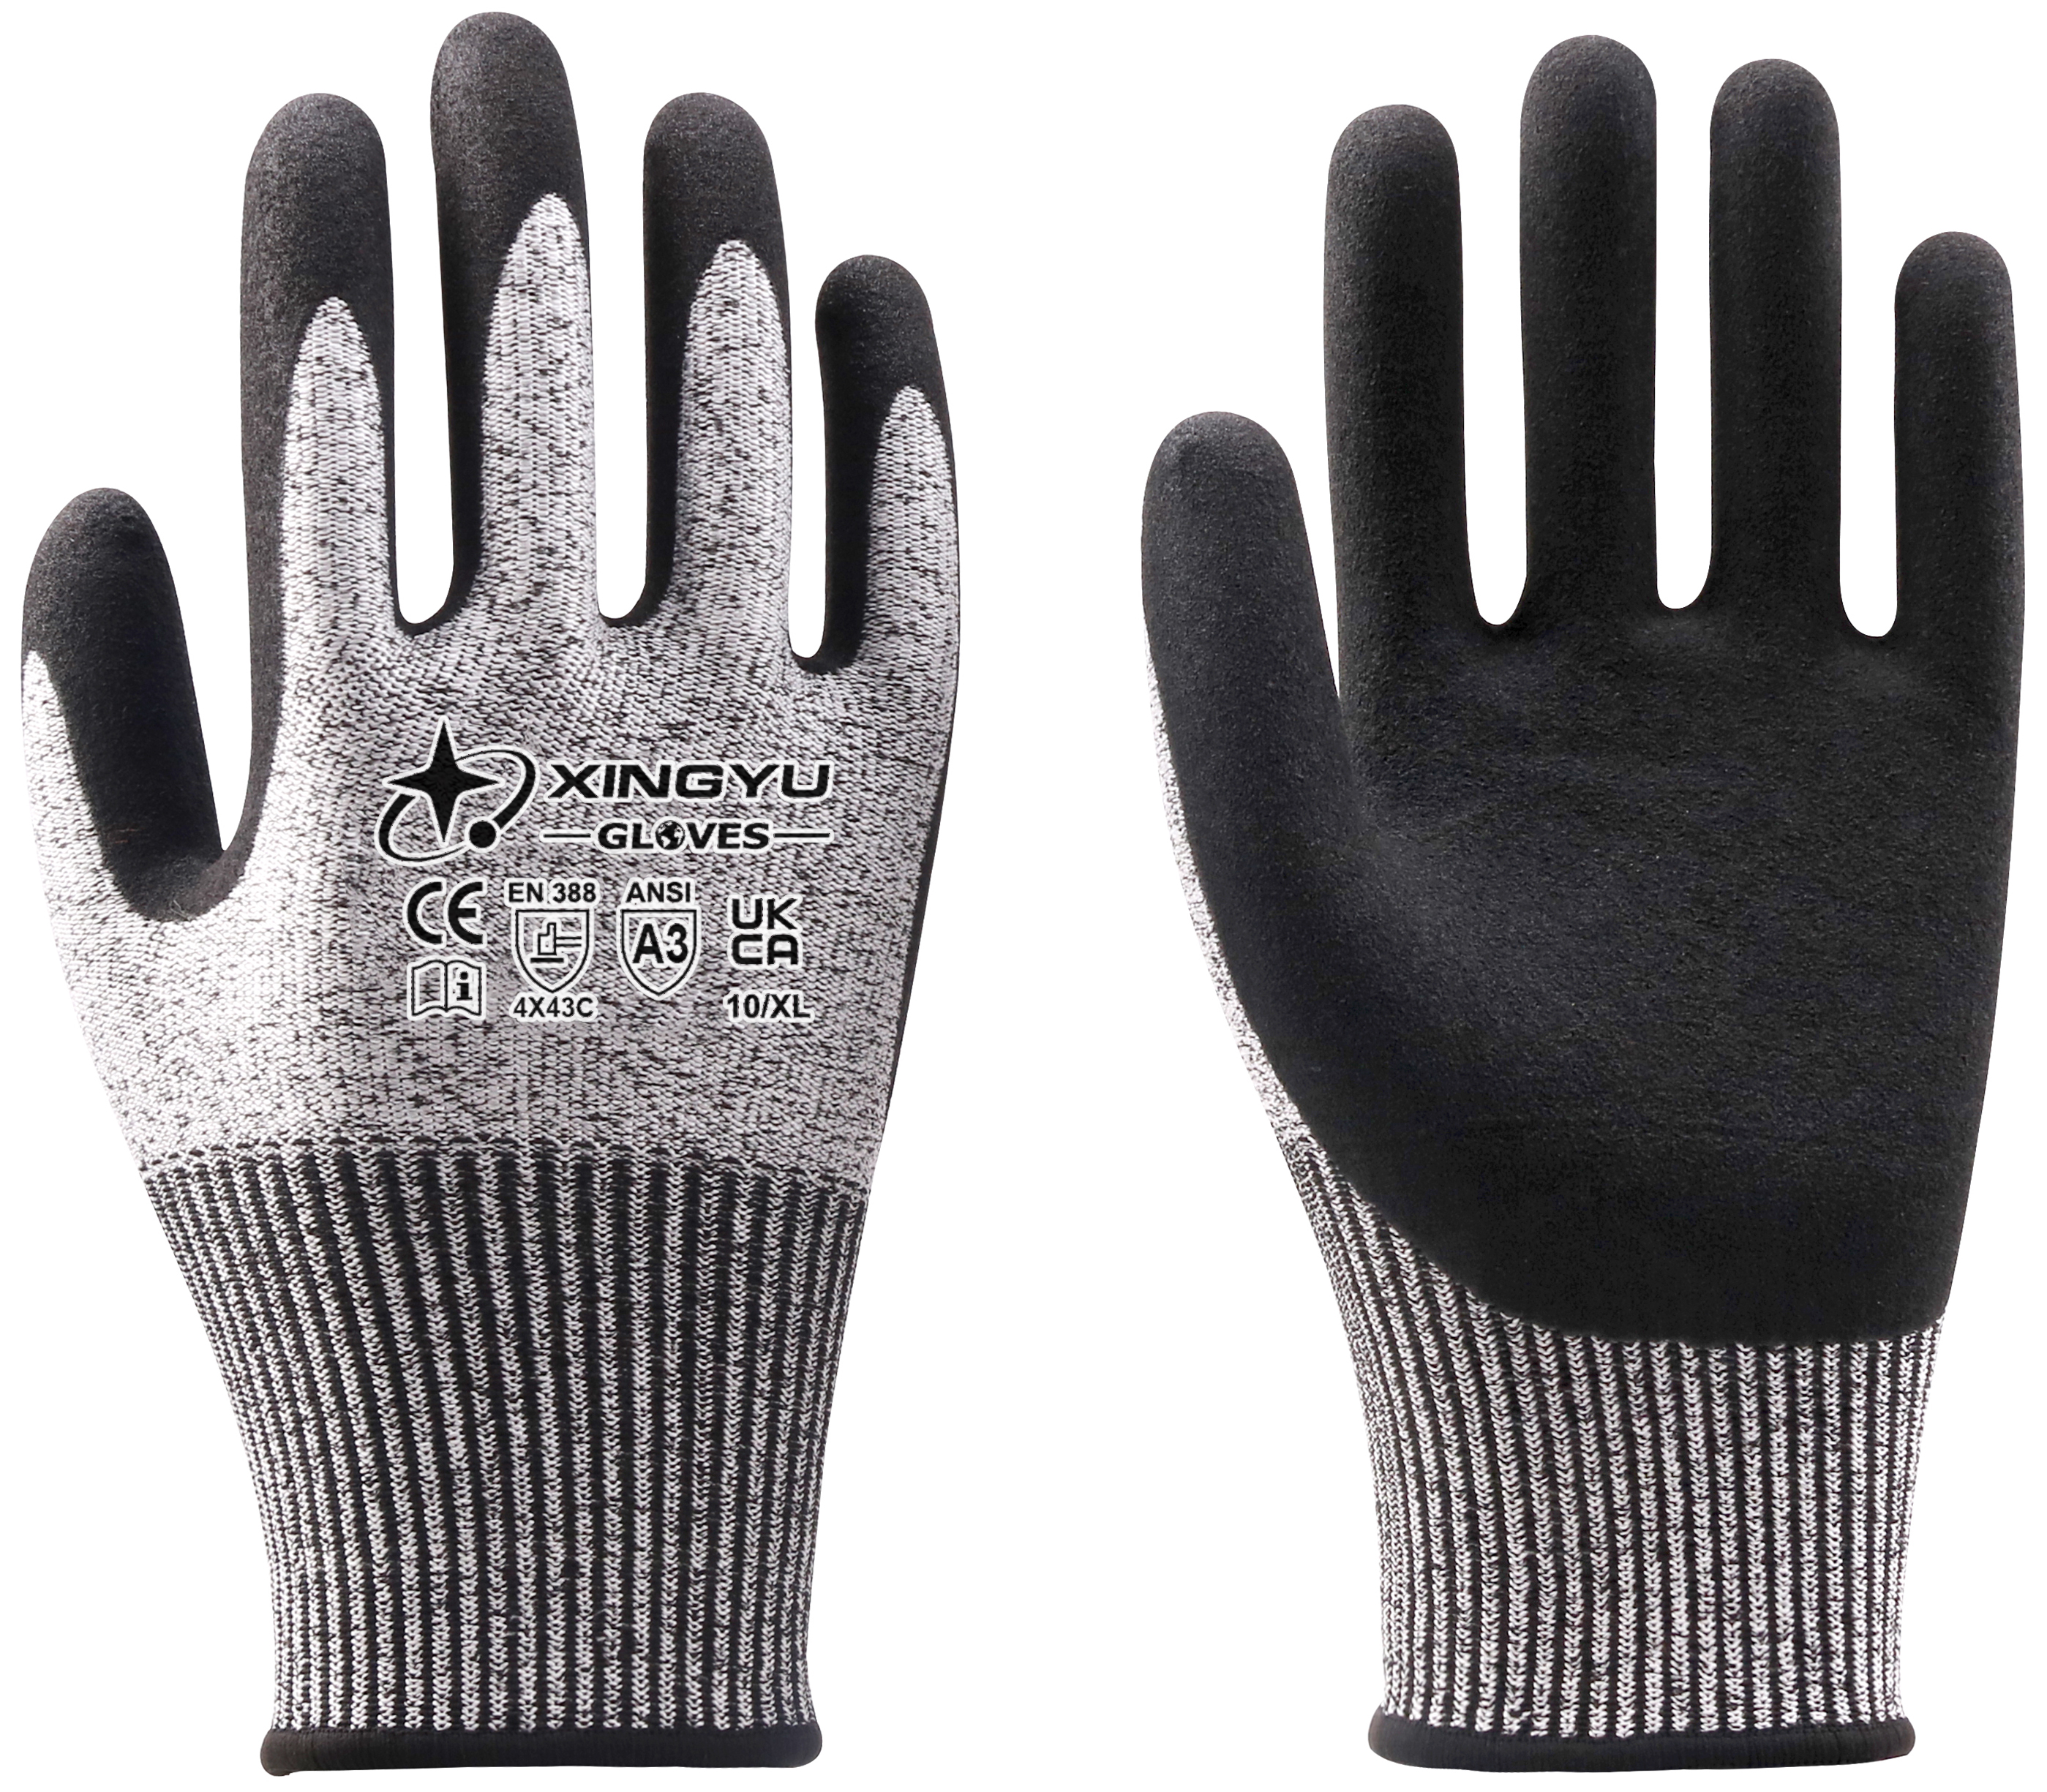 13G HPPE cut resistance gloves 